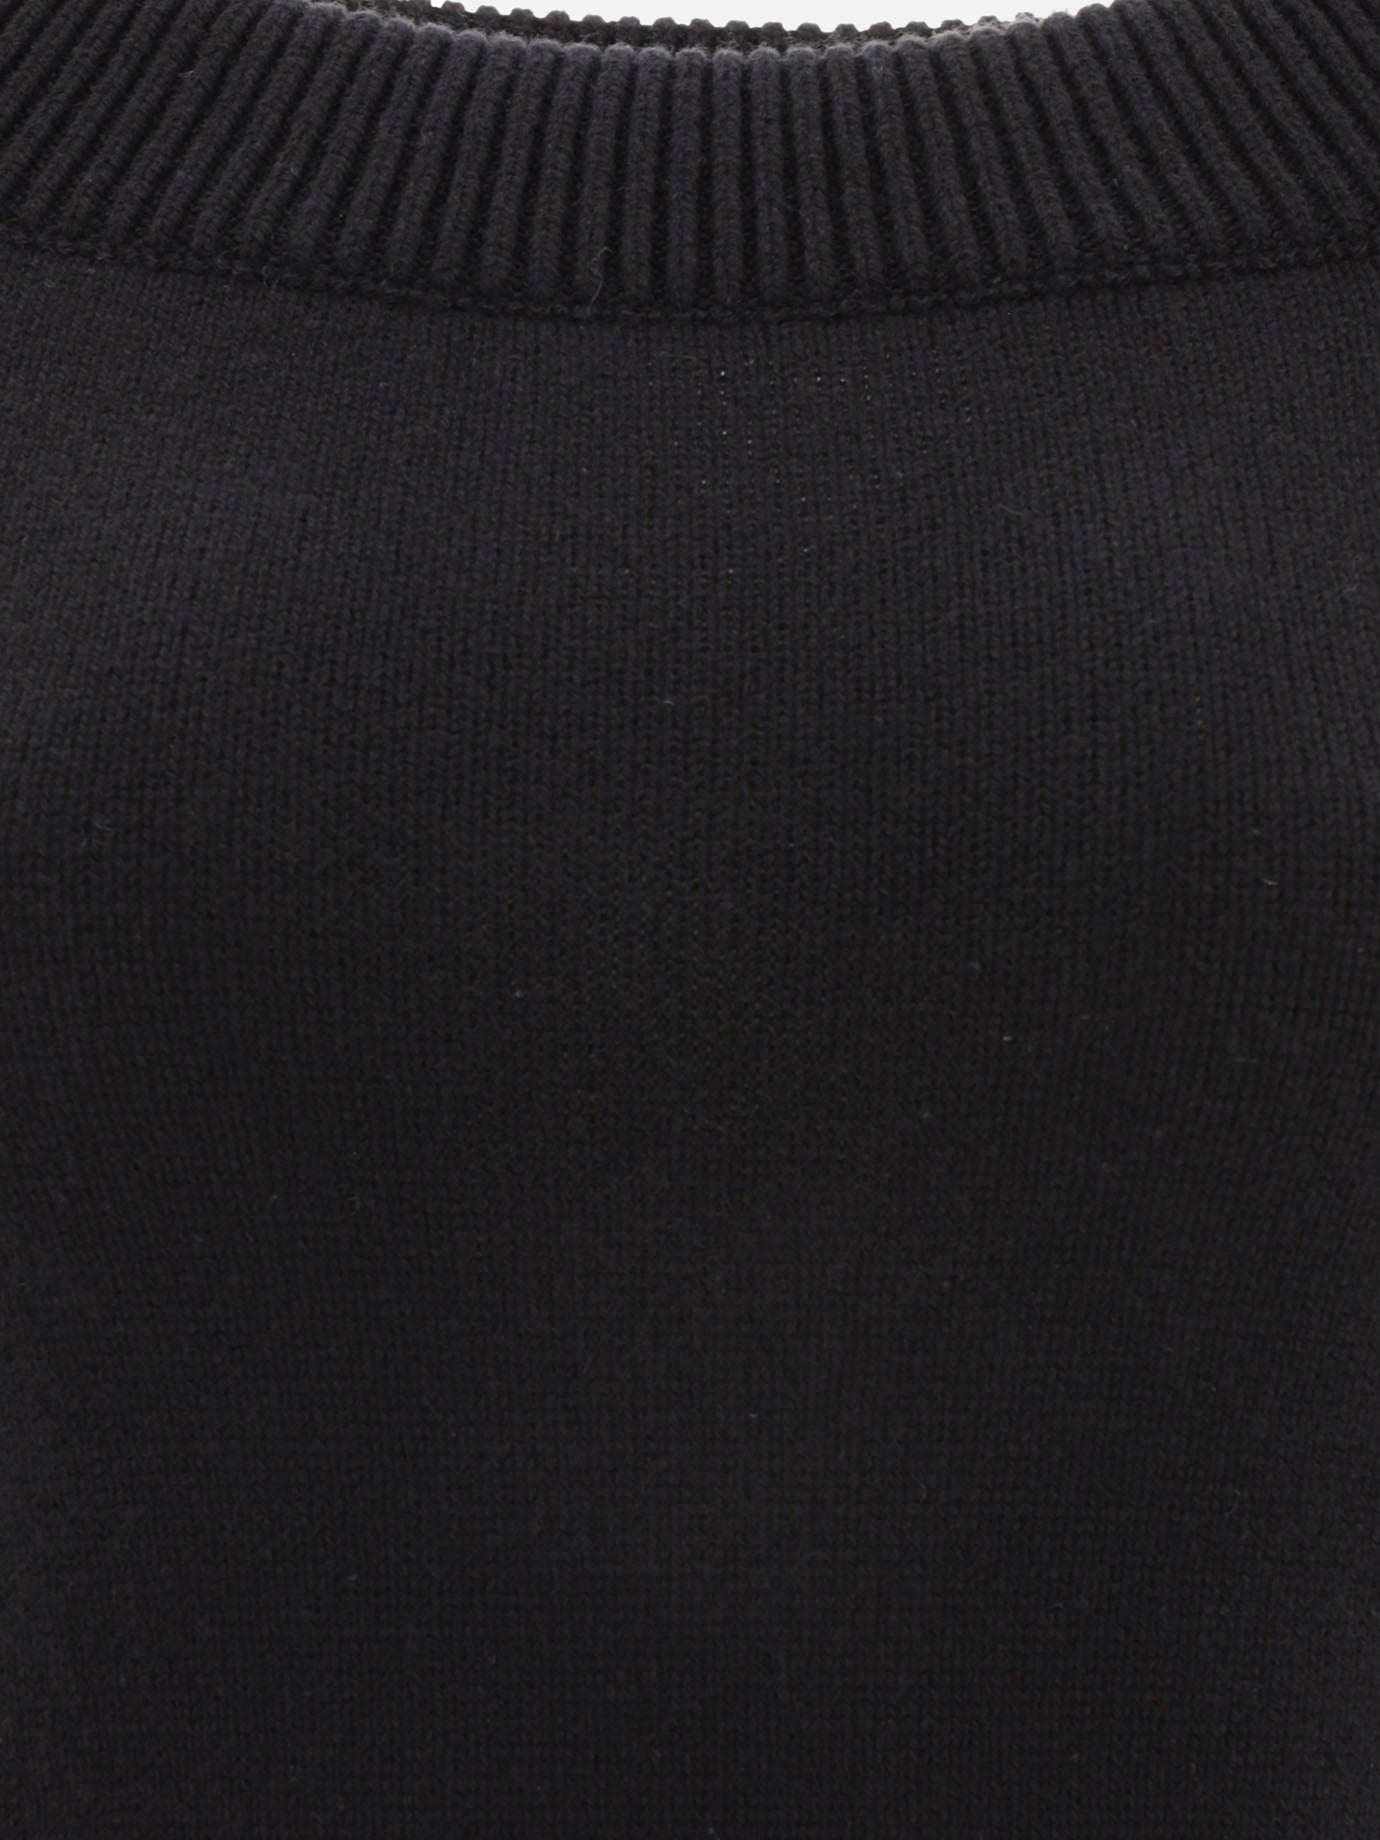 Boat-neck sweater